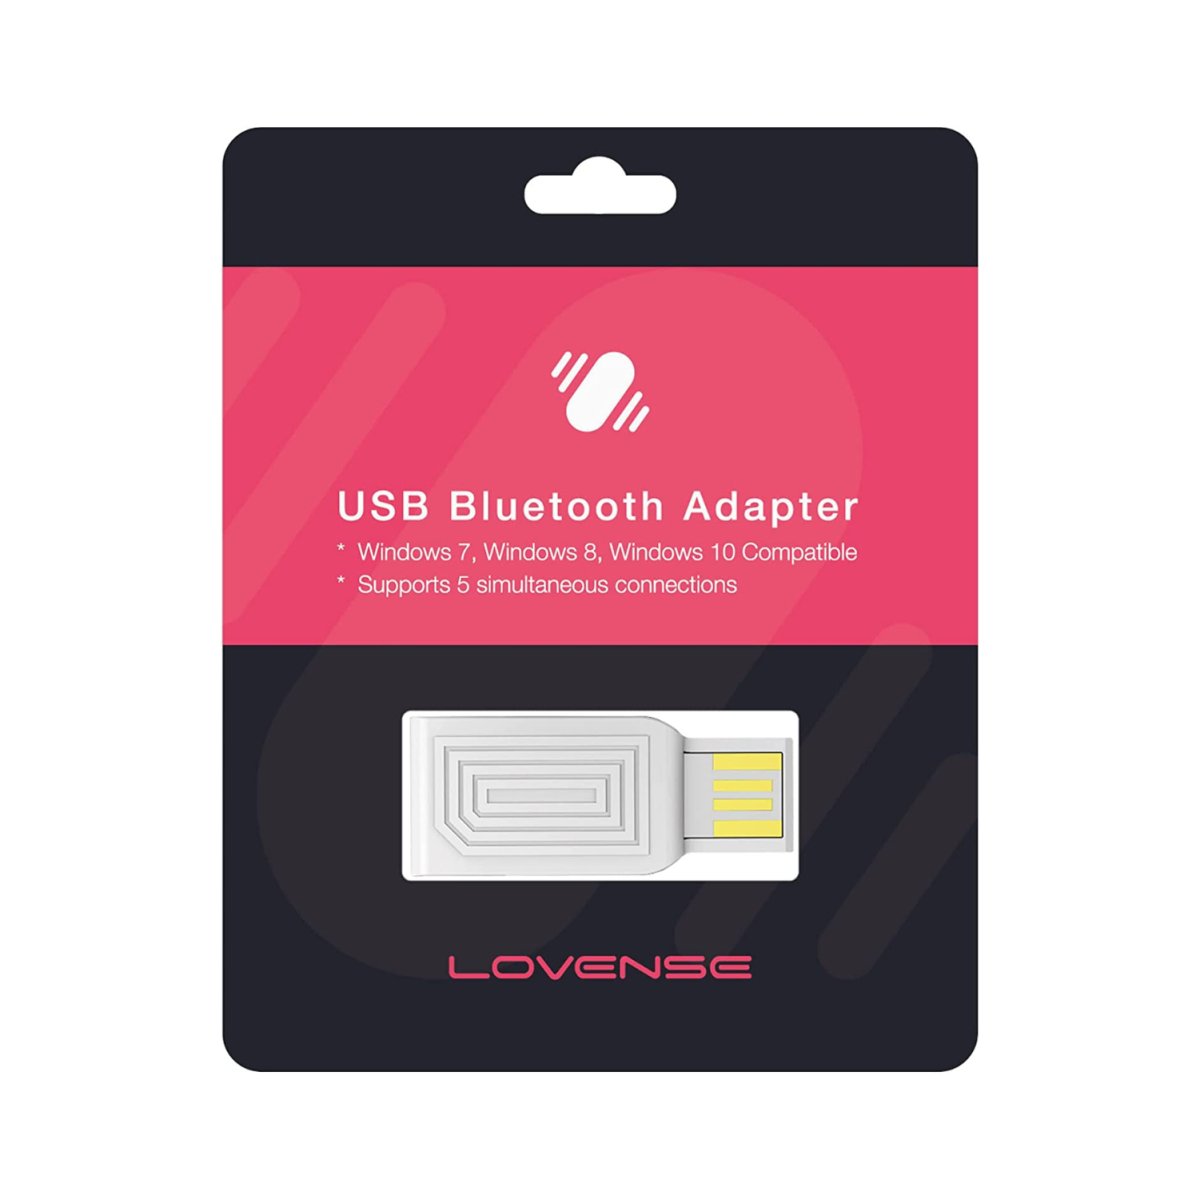 Lovense USB Bluetooth Adapter for Windows PC - FRISKY BUSINESS SG